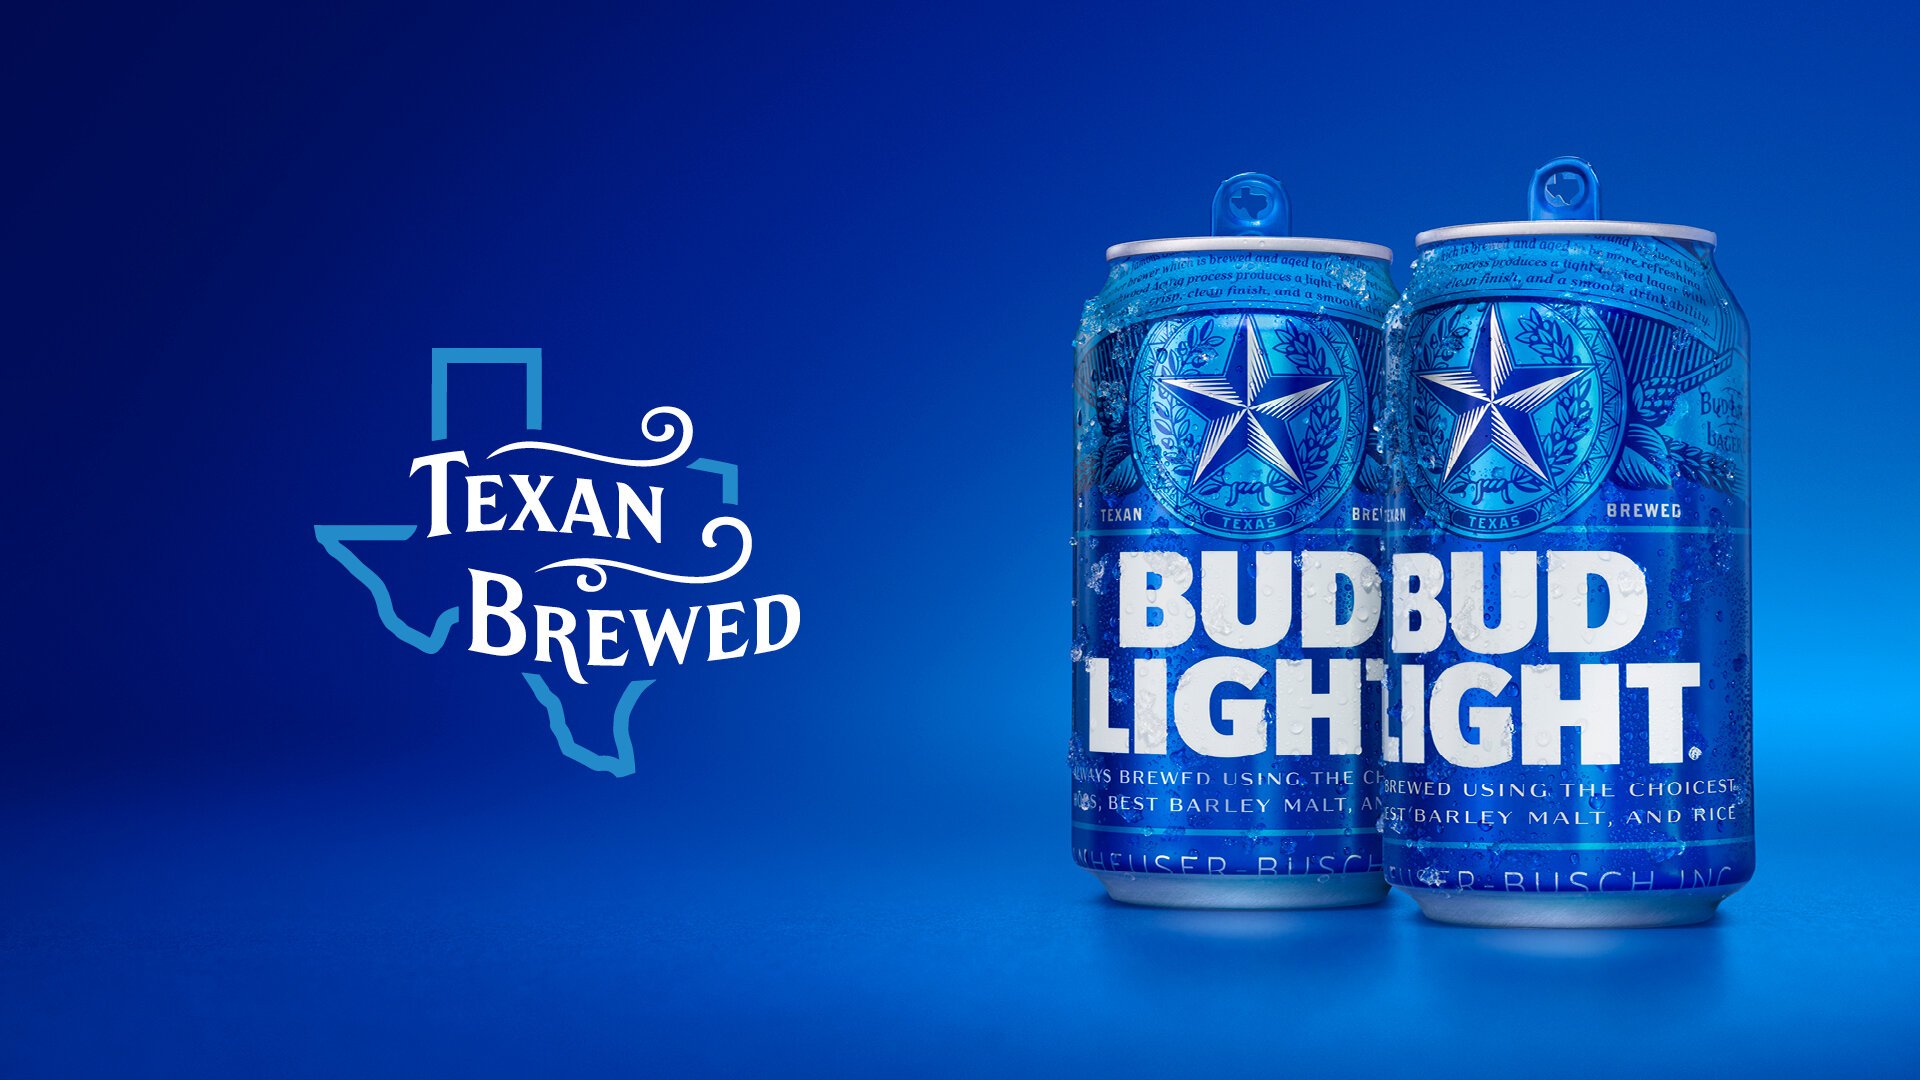 Bud Light texas brewed.jpg